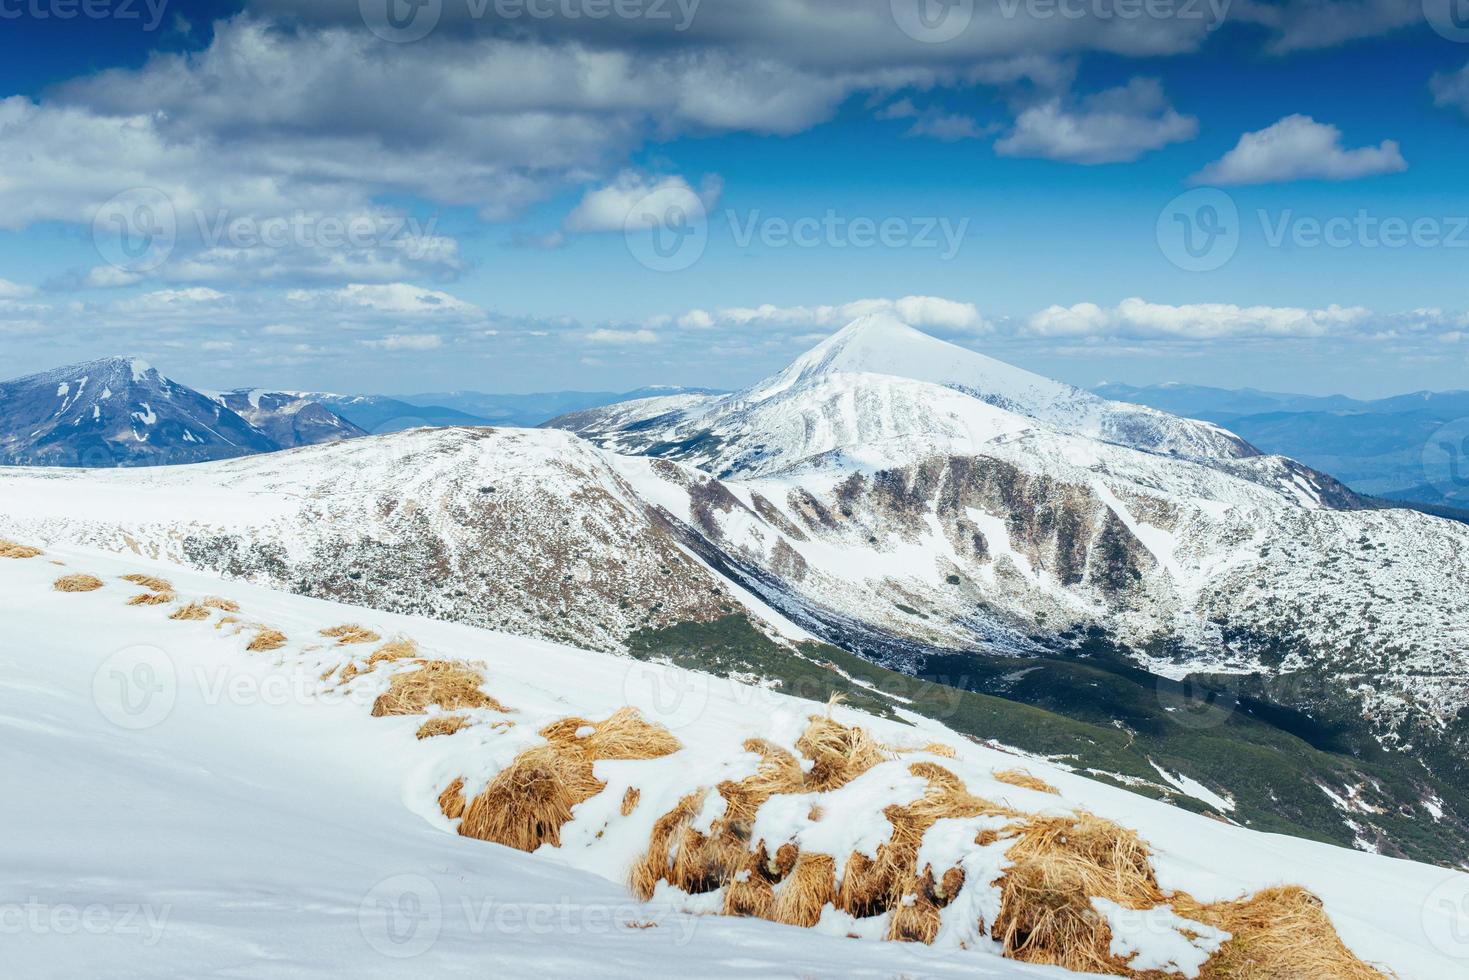 misterioso paesaggio invernale montagne maestose foto